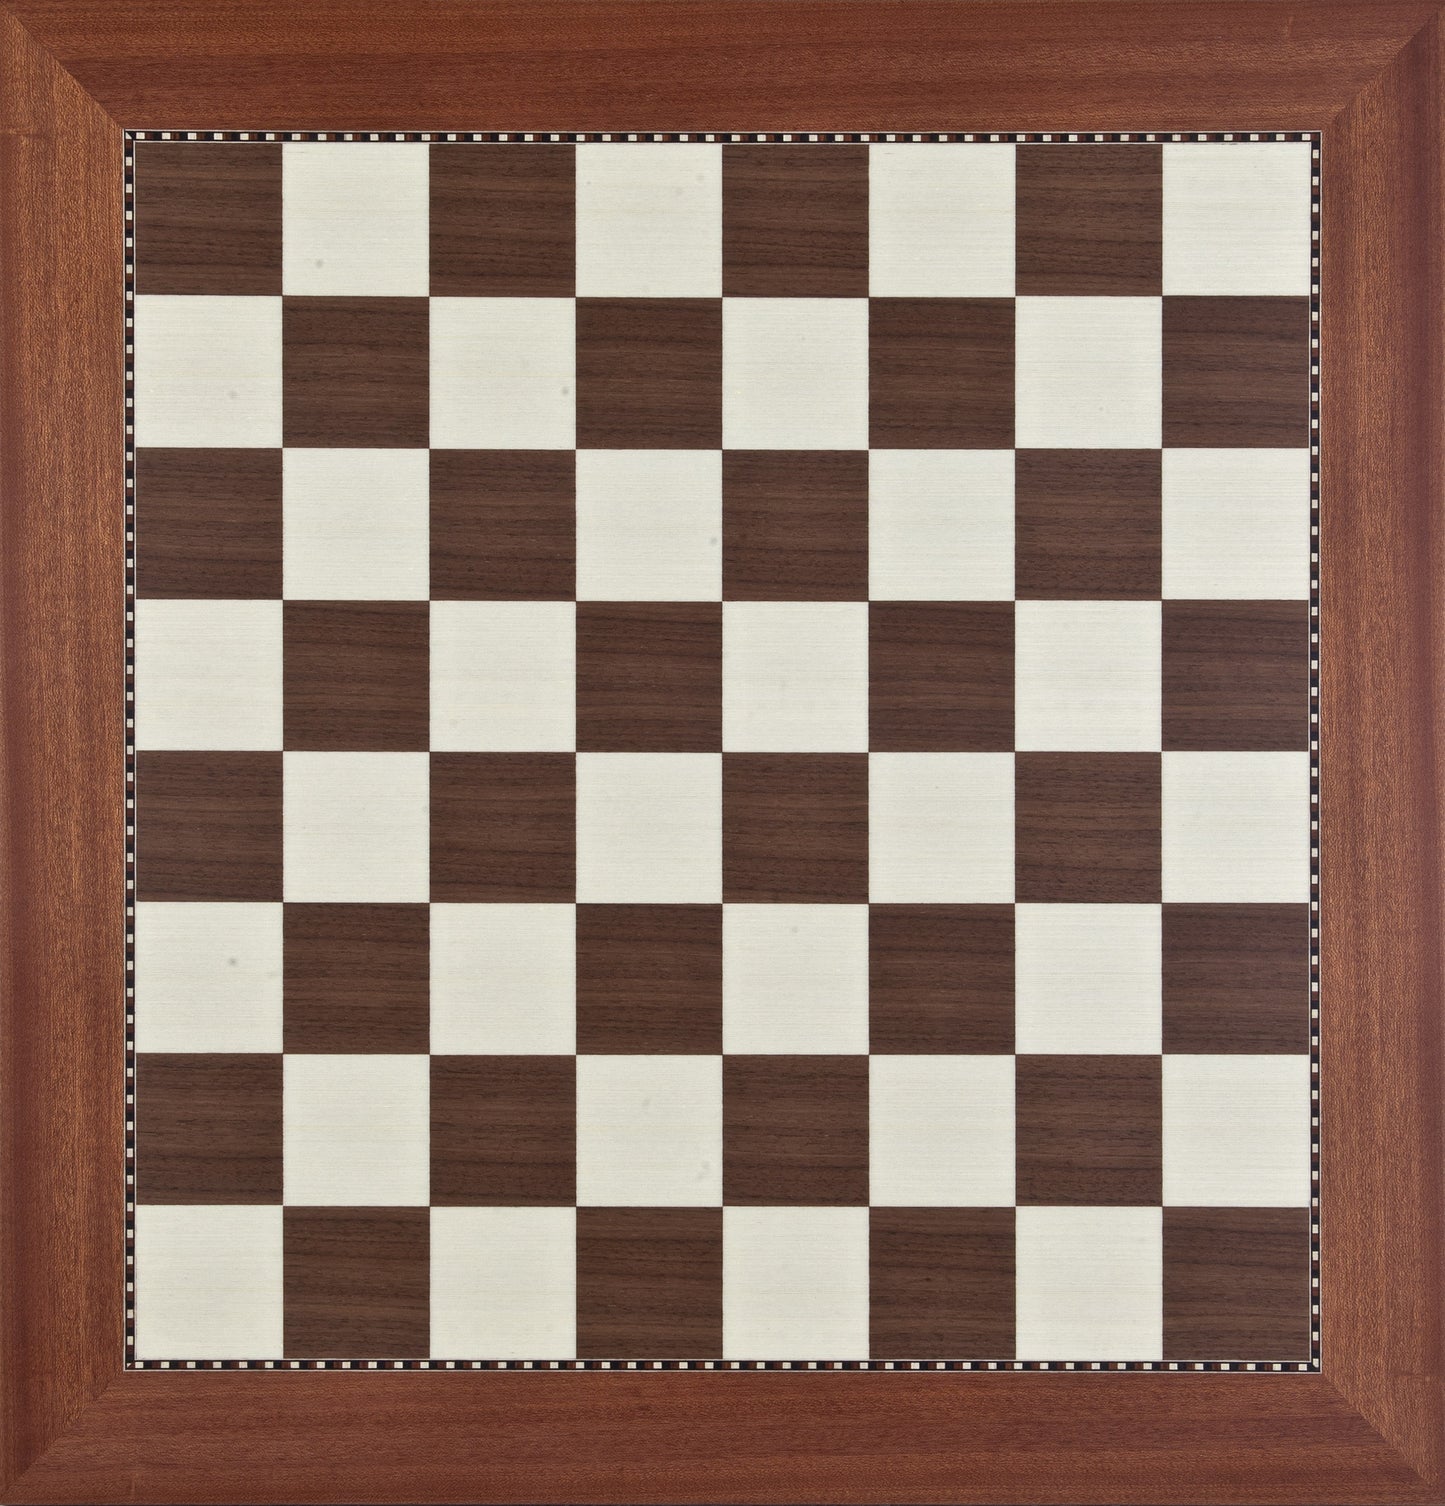 20 inch Champion Wood Chess Board